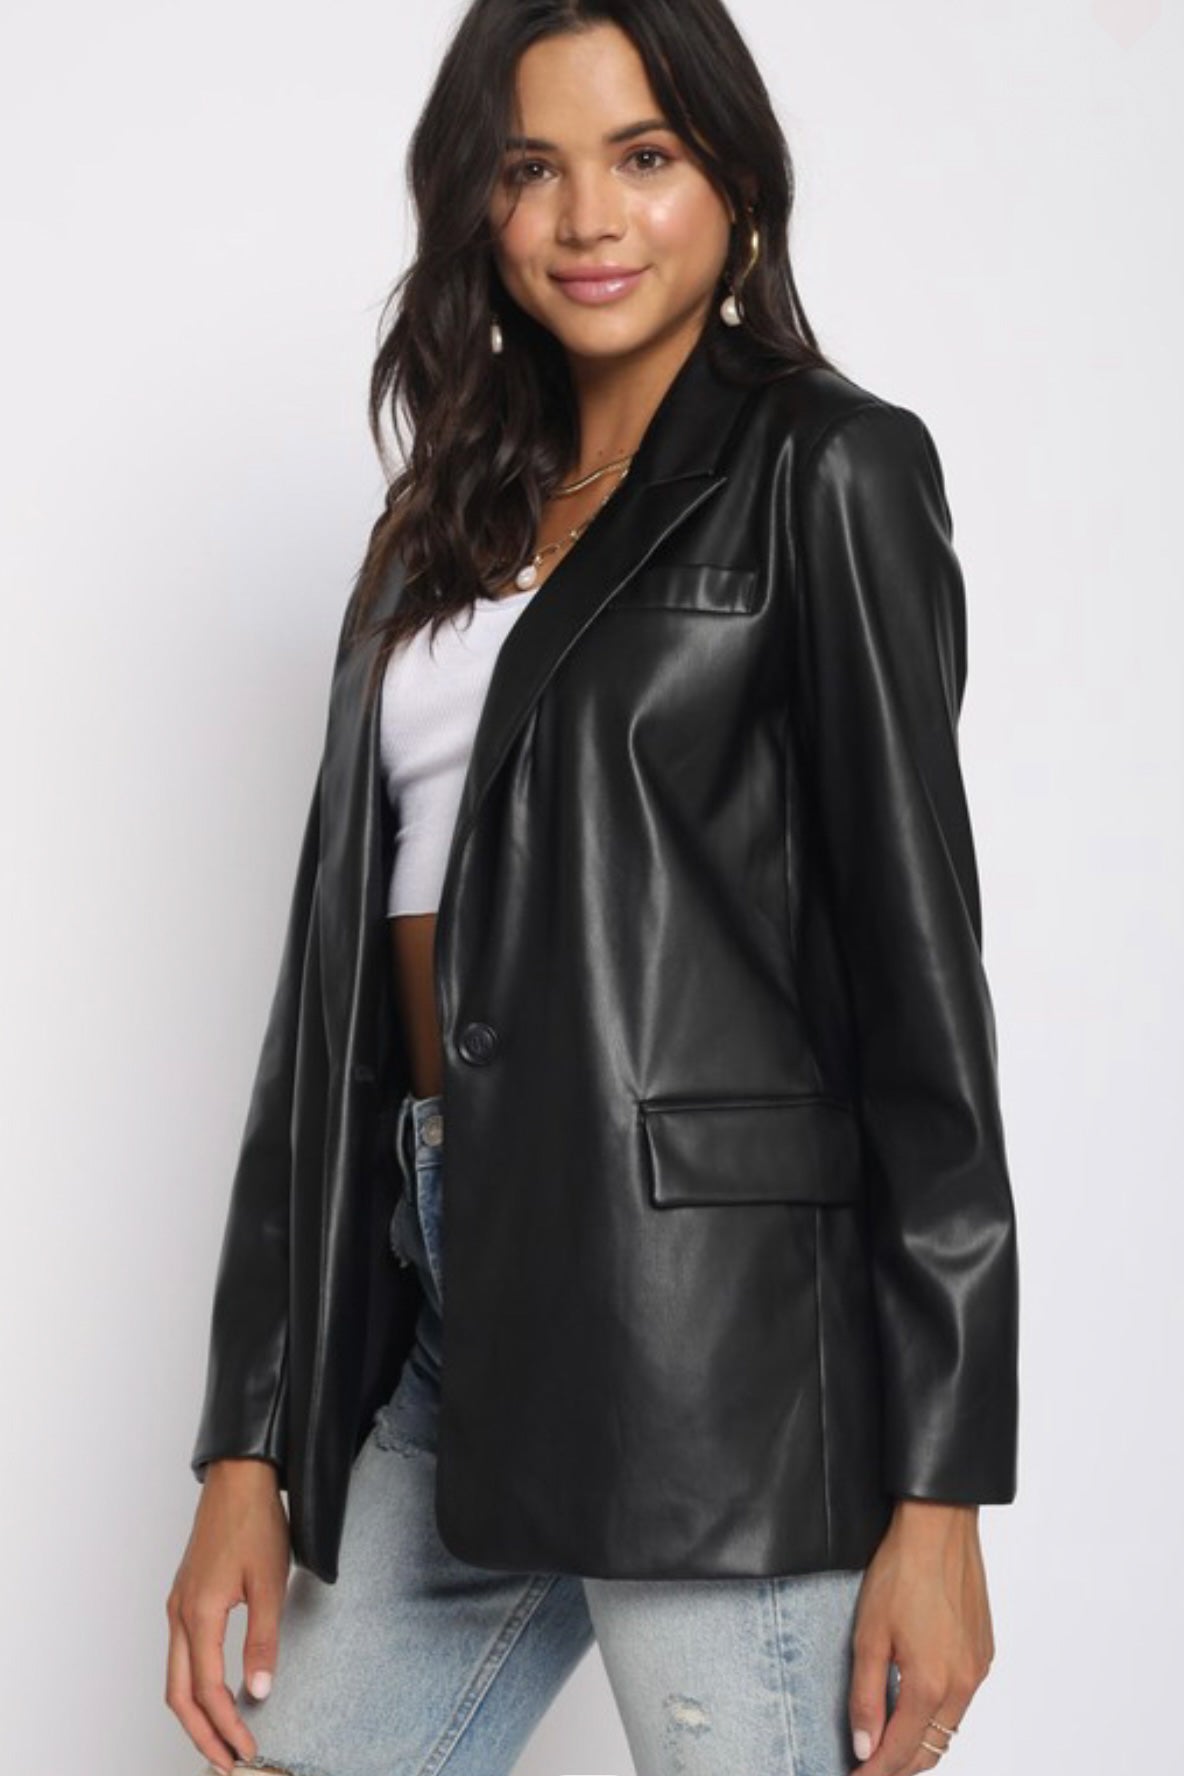 Glow Fashion Boutique vegan leather black blazer